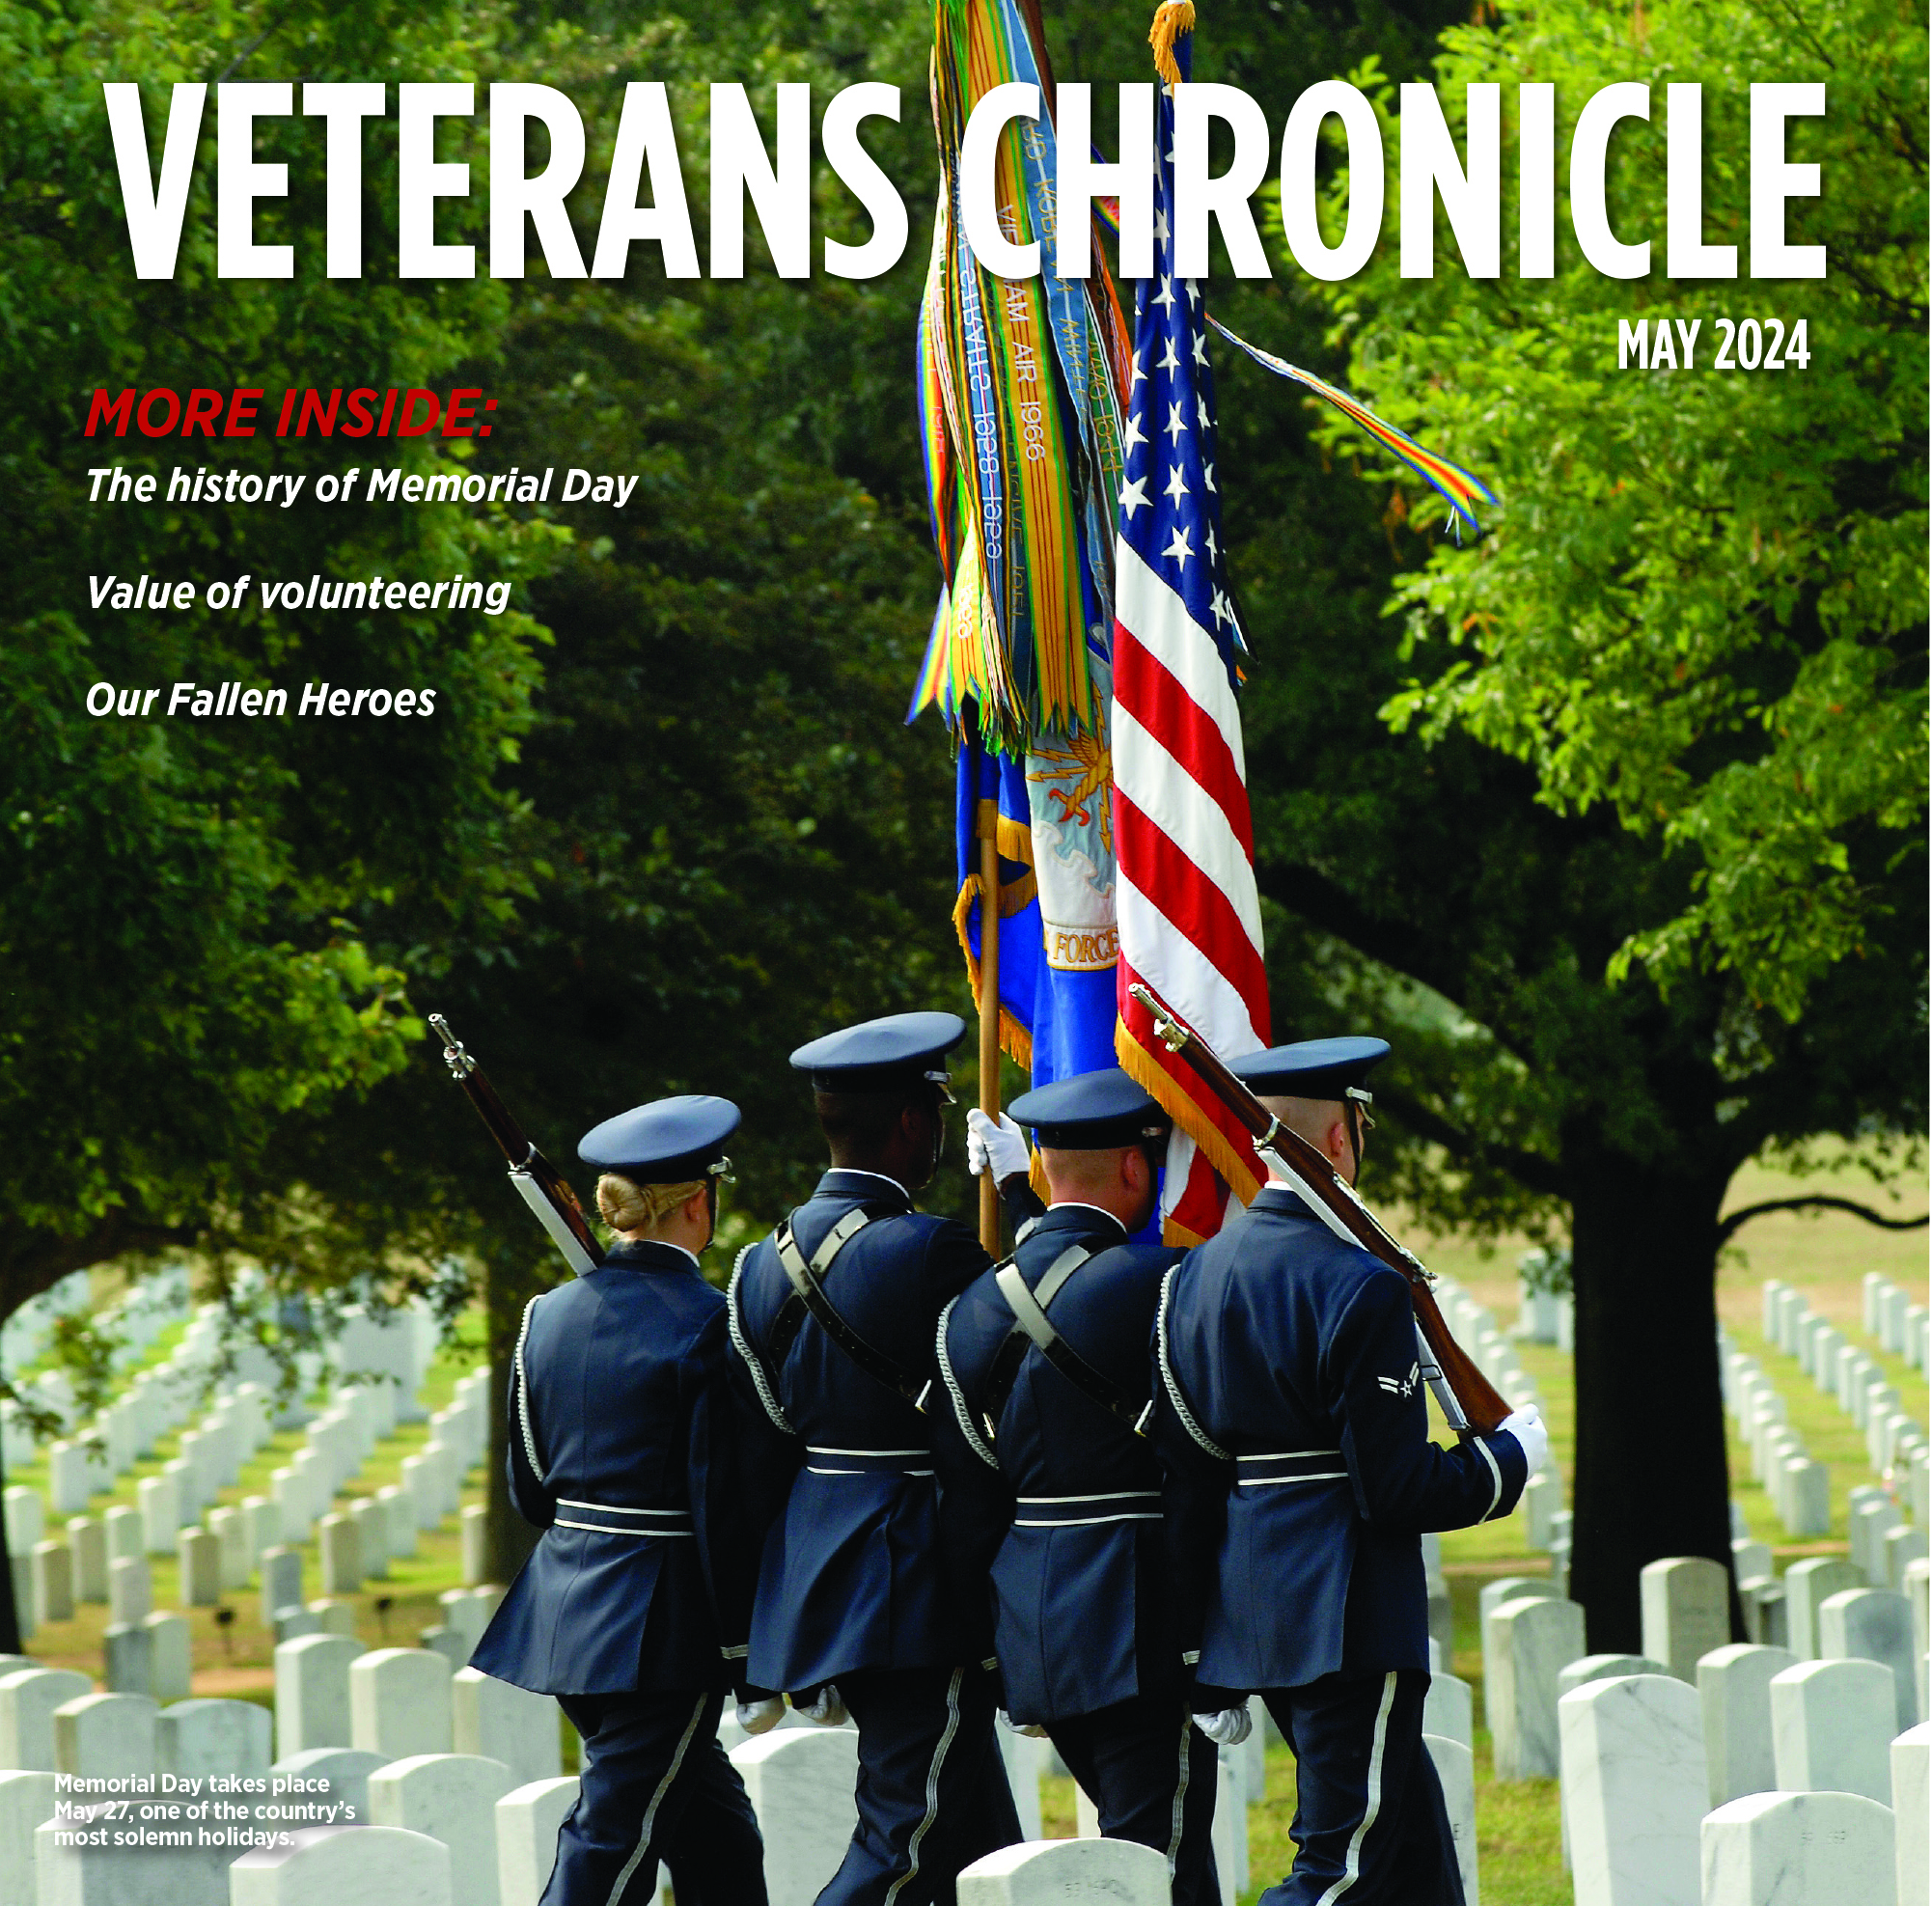 Veterans Chronicle Memorial Day May 2024